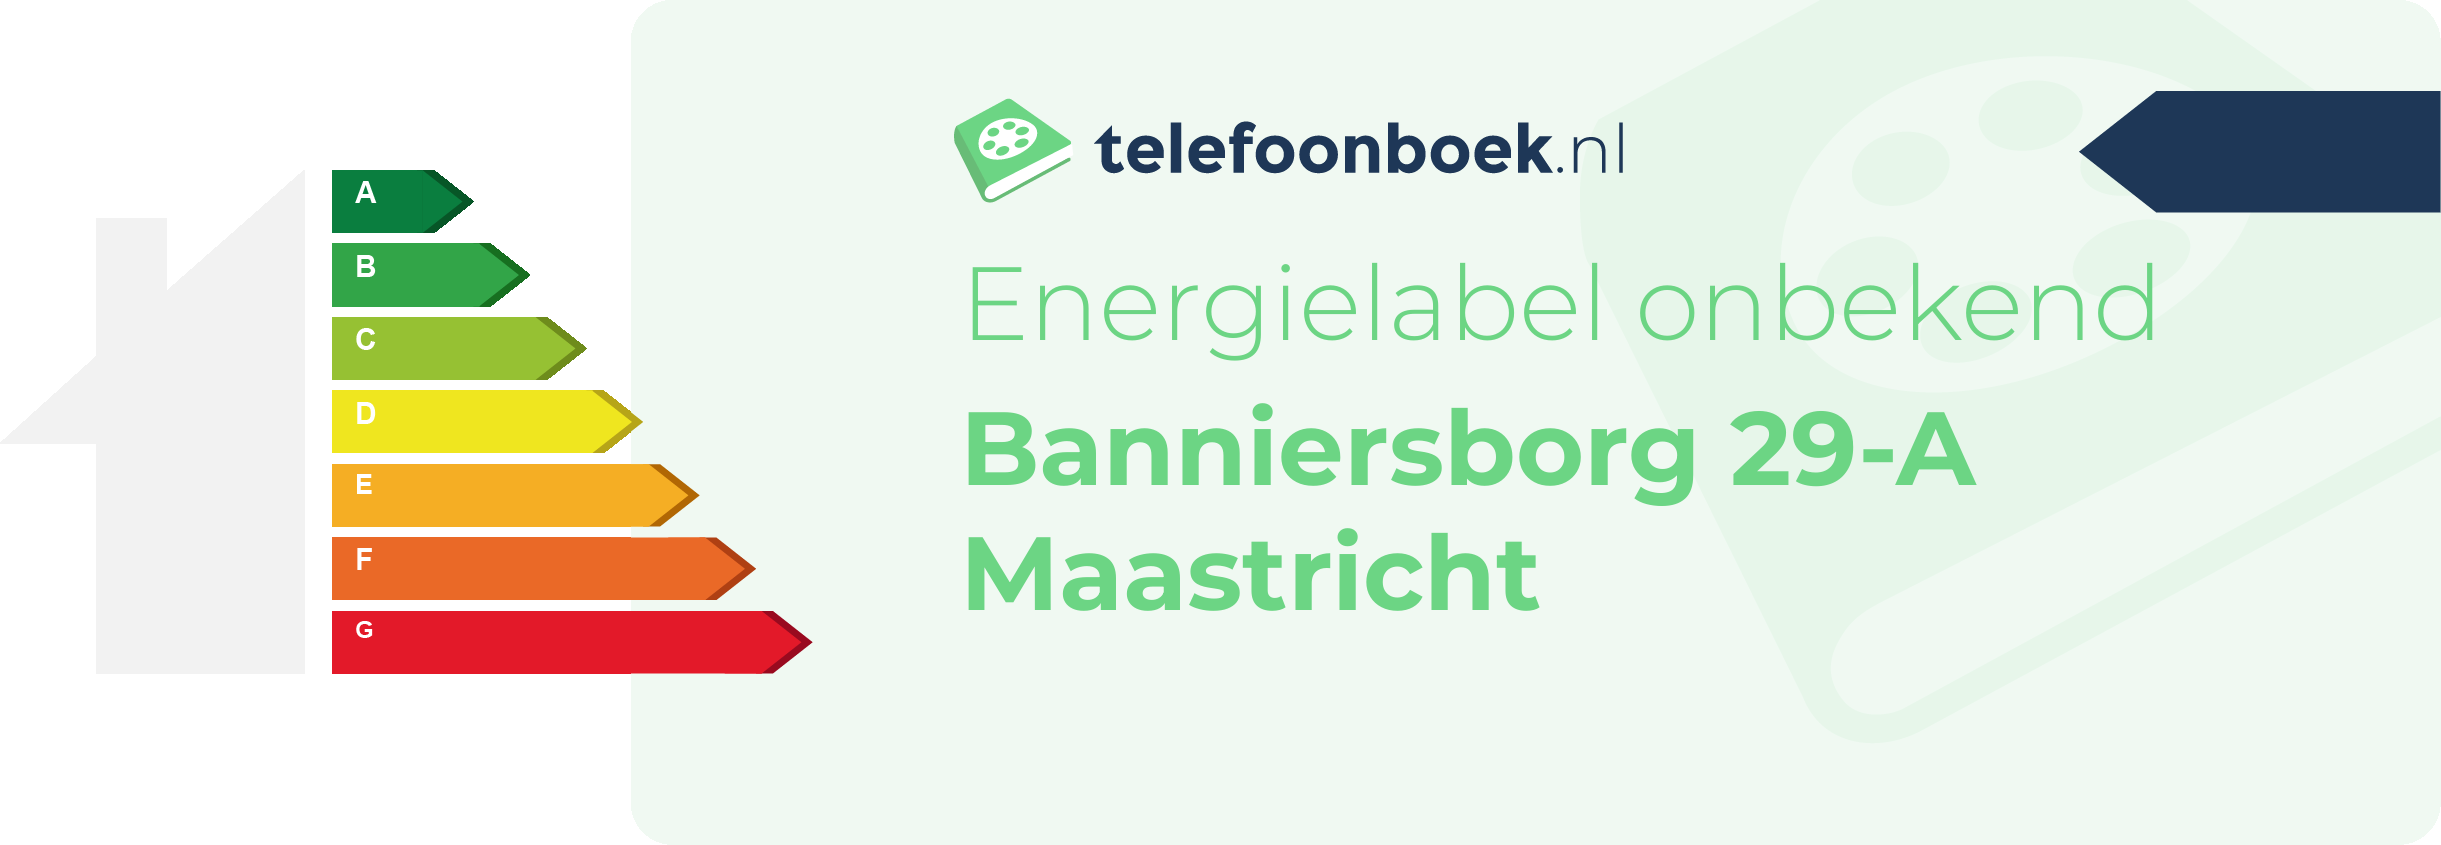 Energielabel Banniersborg 29-A Maastricht